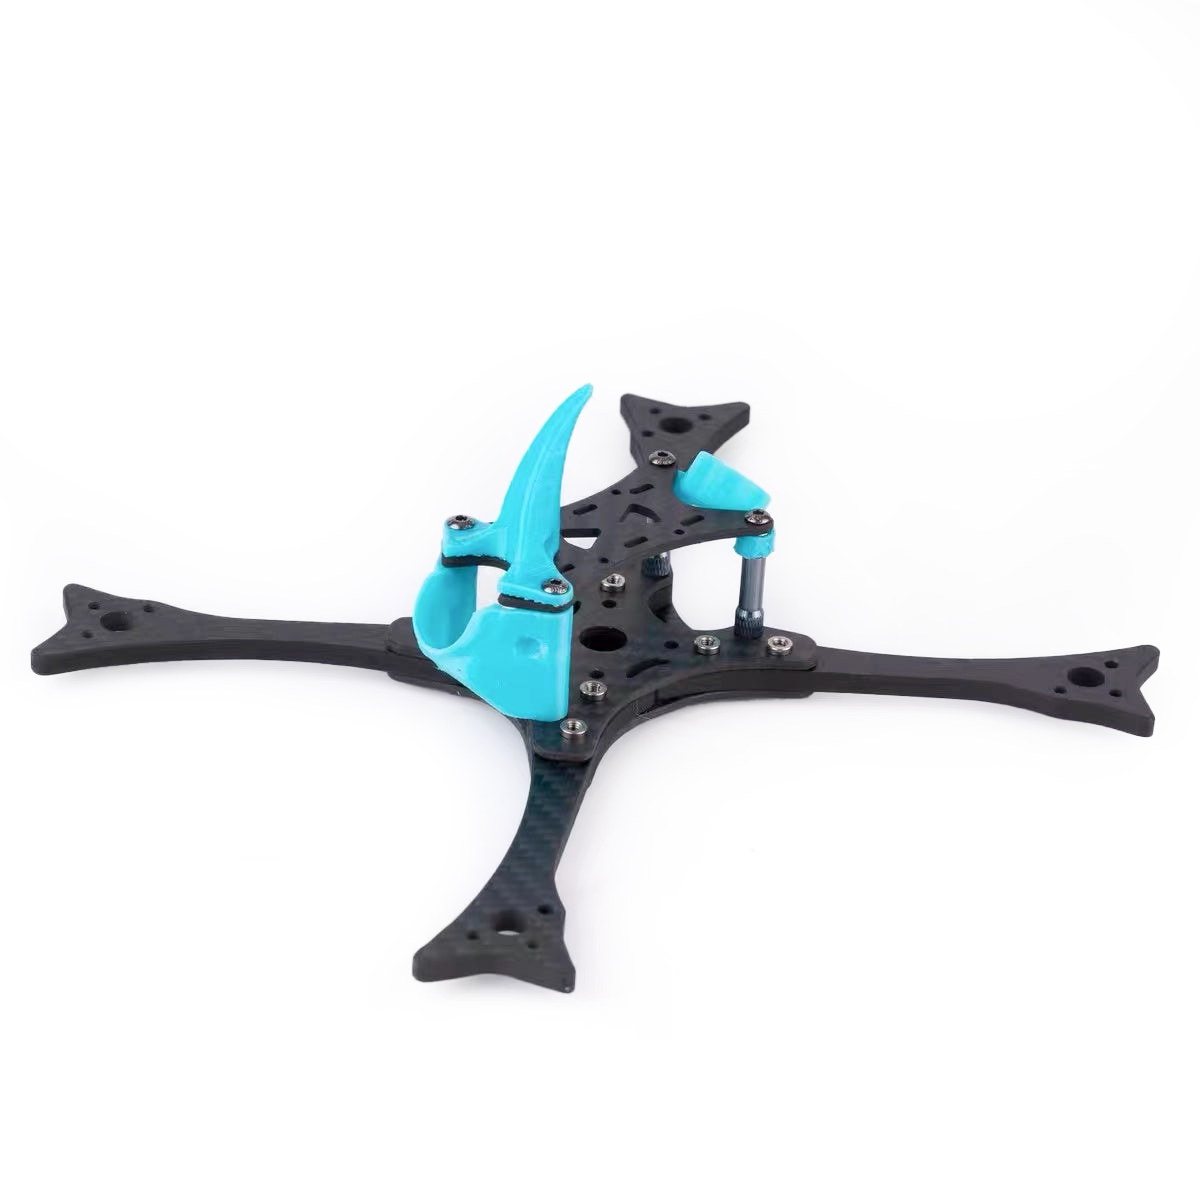 Dragon Eel, 5-inch FPV  drone racing frame